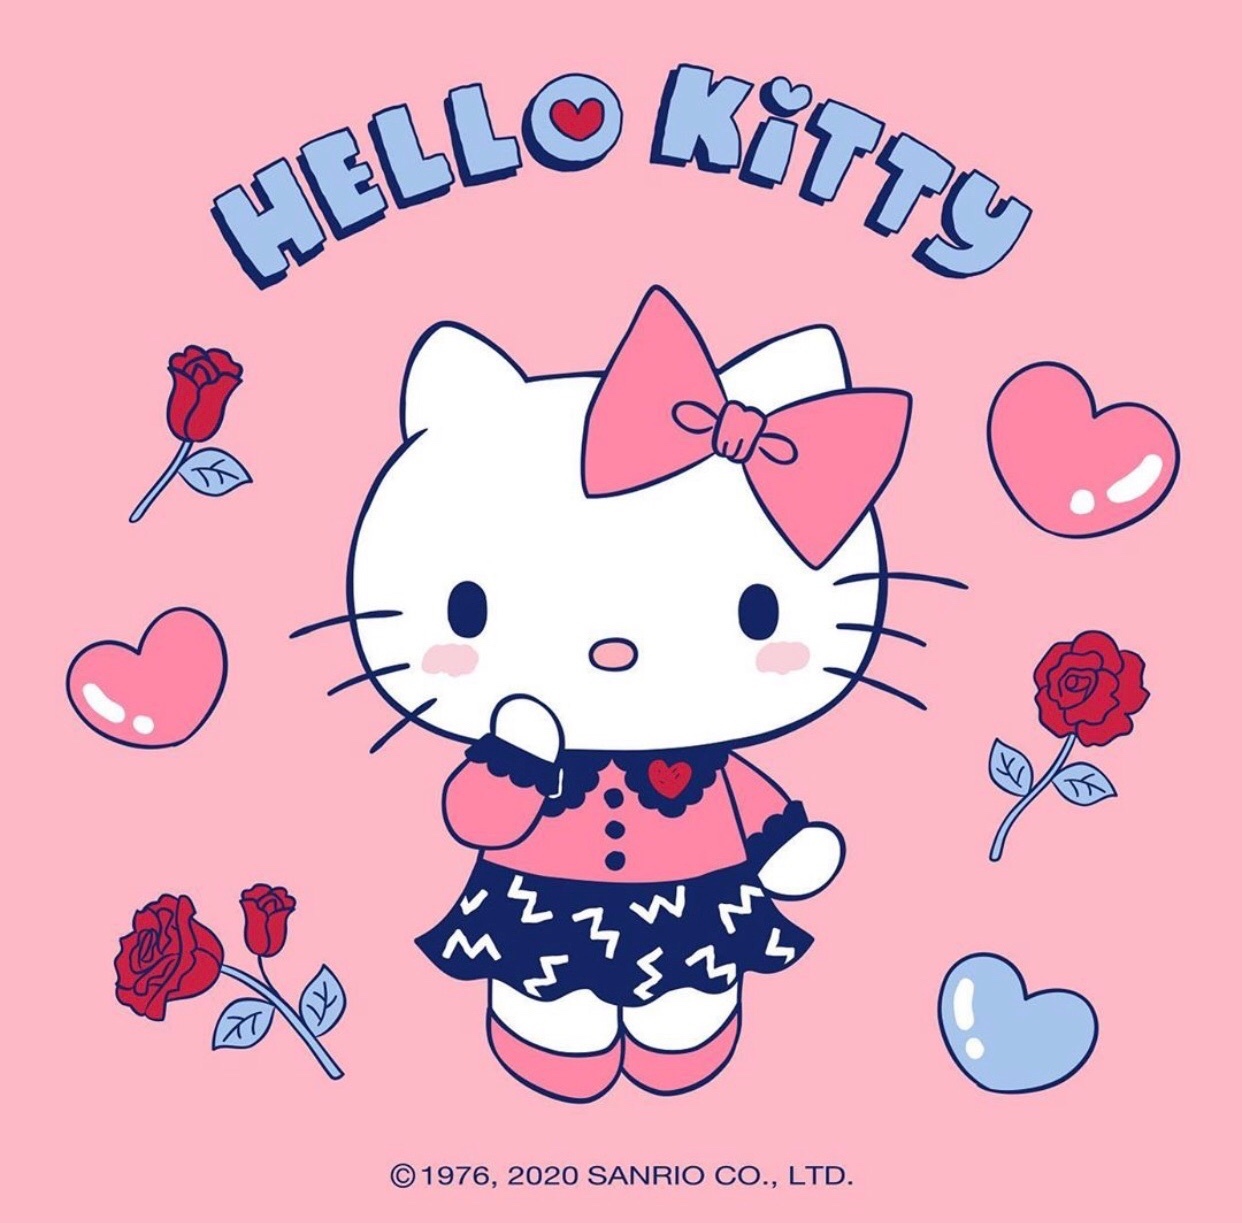 hellokitty可爱壁纸,凯蒂猫壁纸图片 粉色 - 伤感说说吧